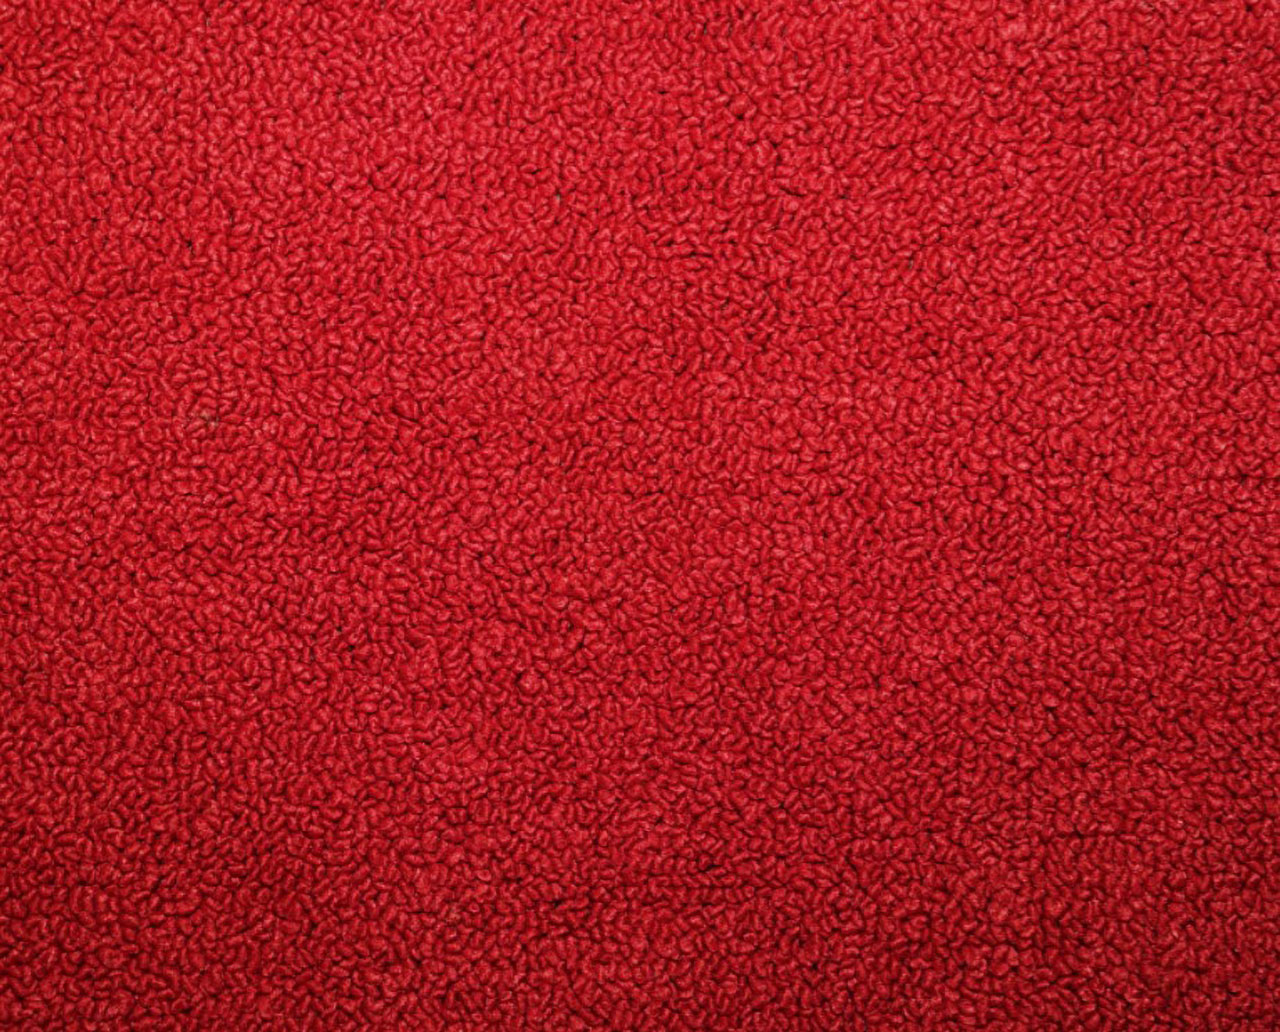 Holden Premier HG Premier Sedan 12R Baroque Red Carpet (Image 1 of 1)